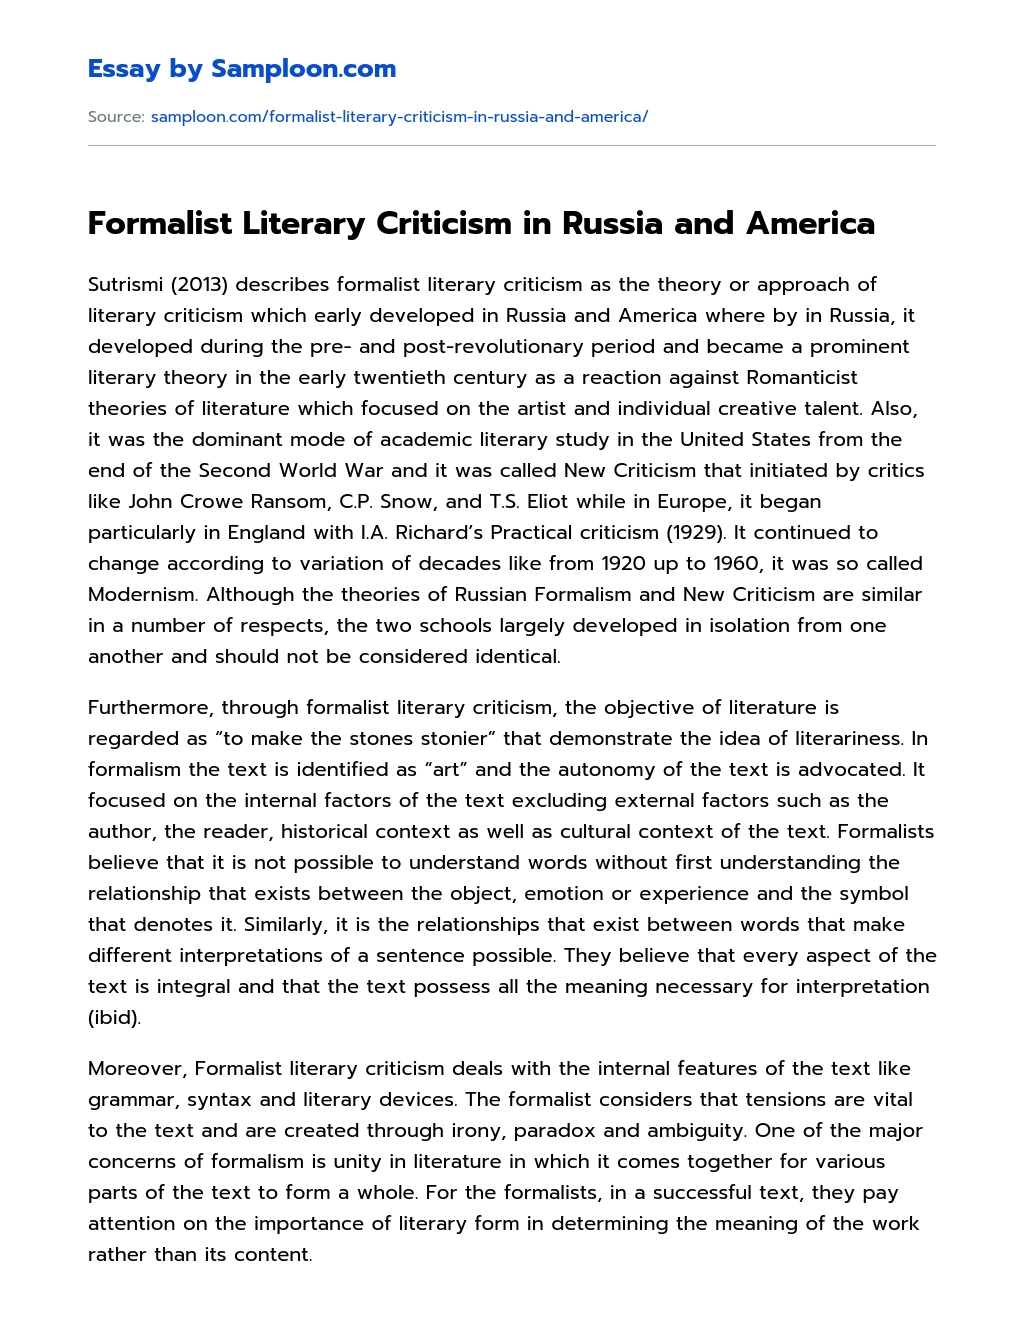 Formalist Literary Criticism in Russia and America essay